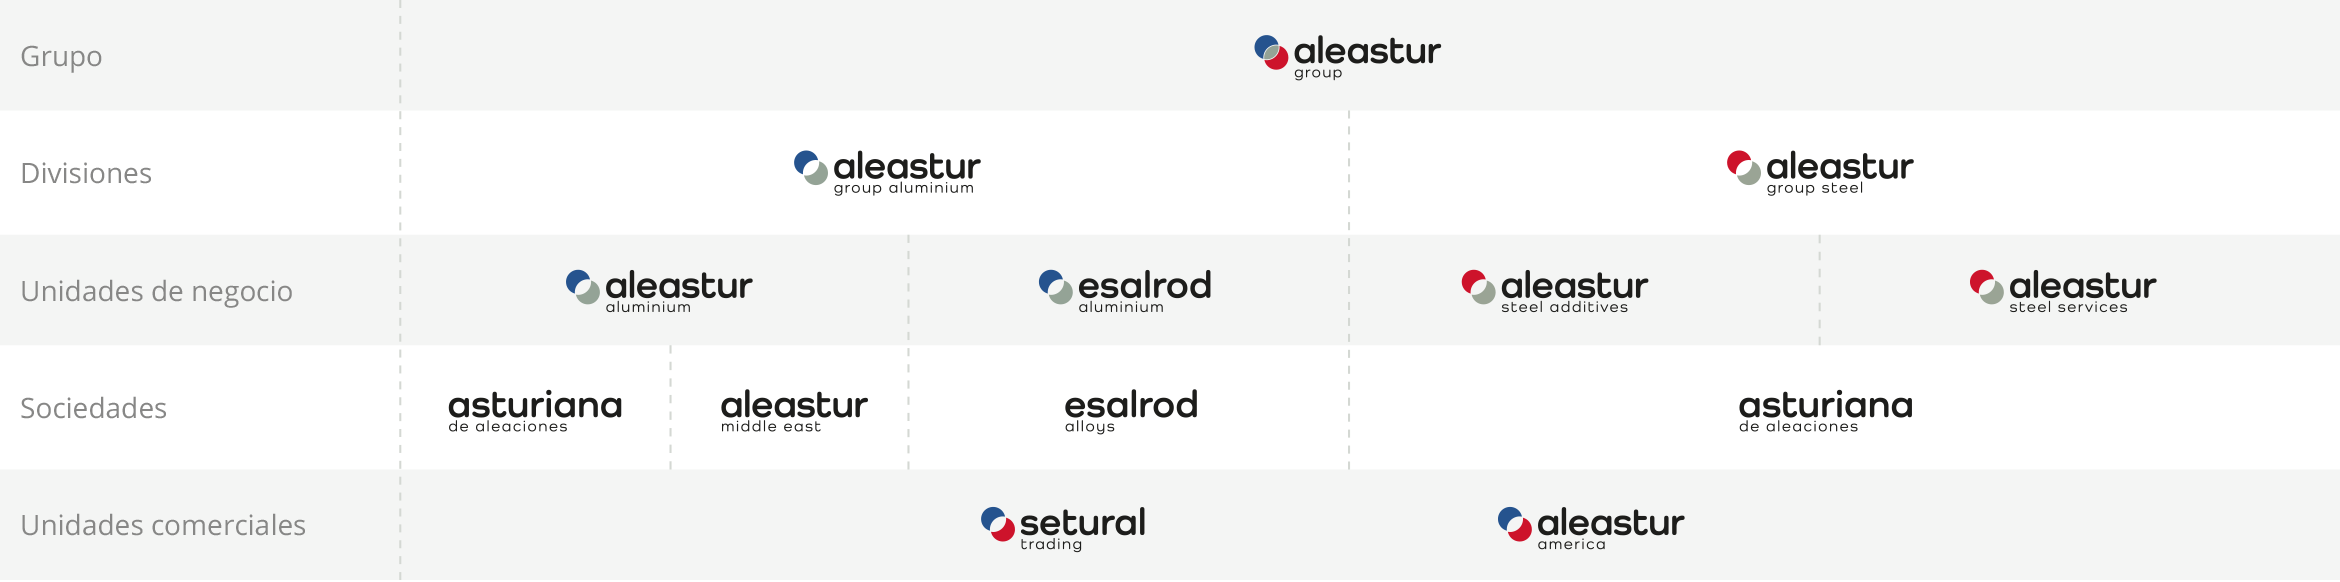 Logos aleastur group